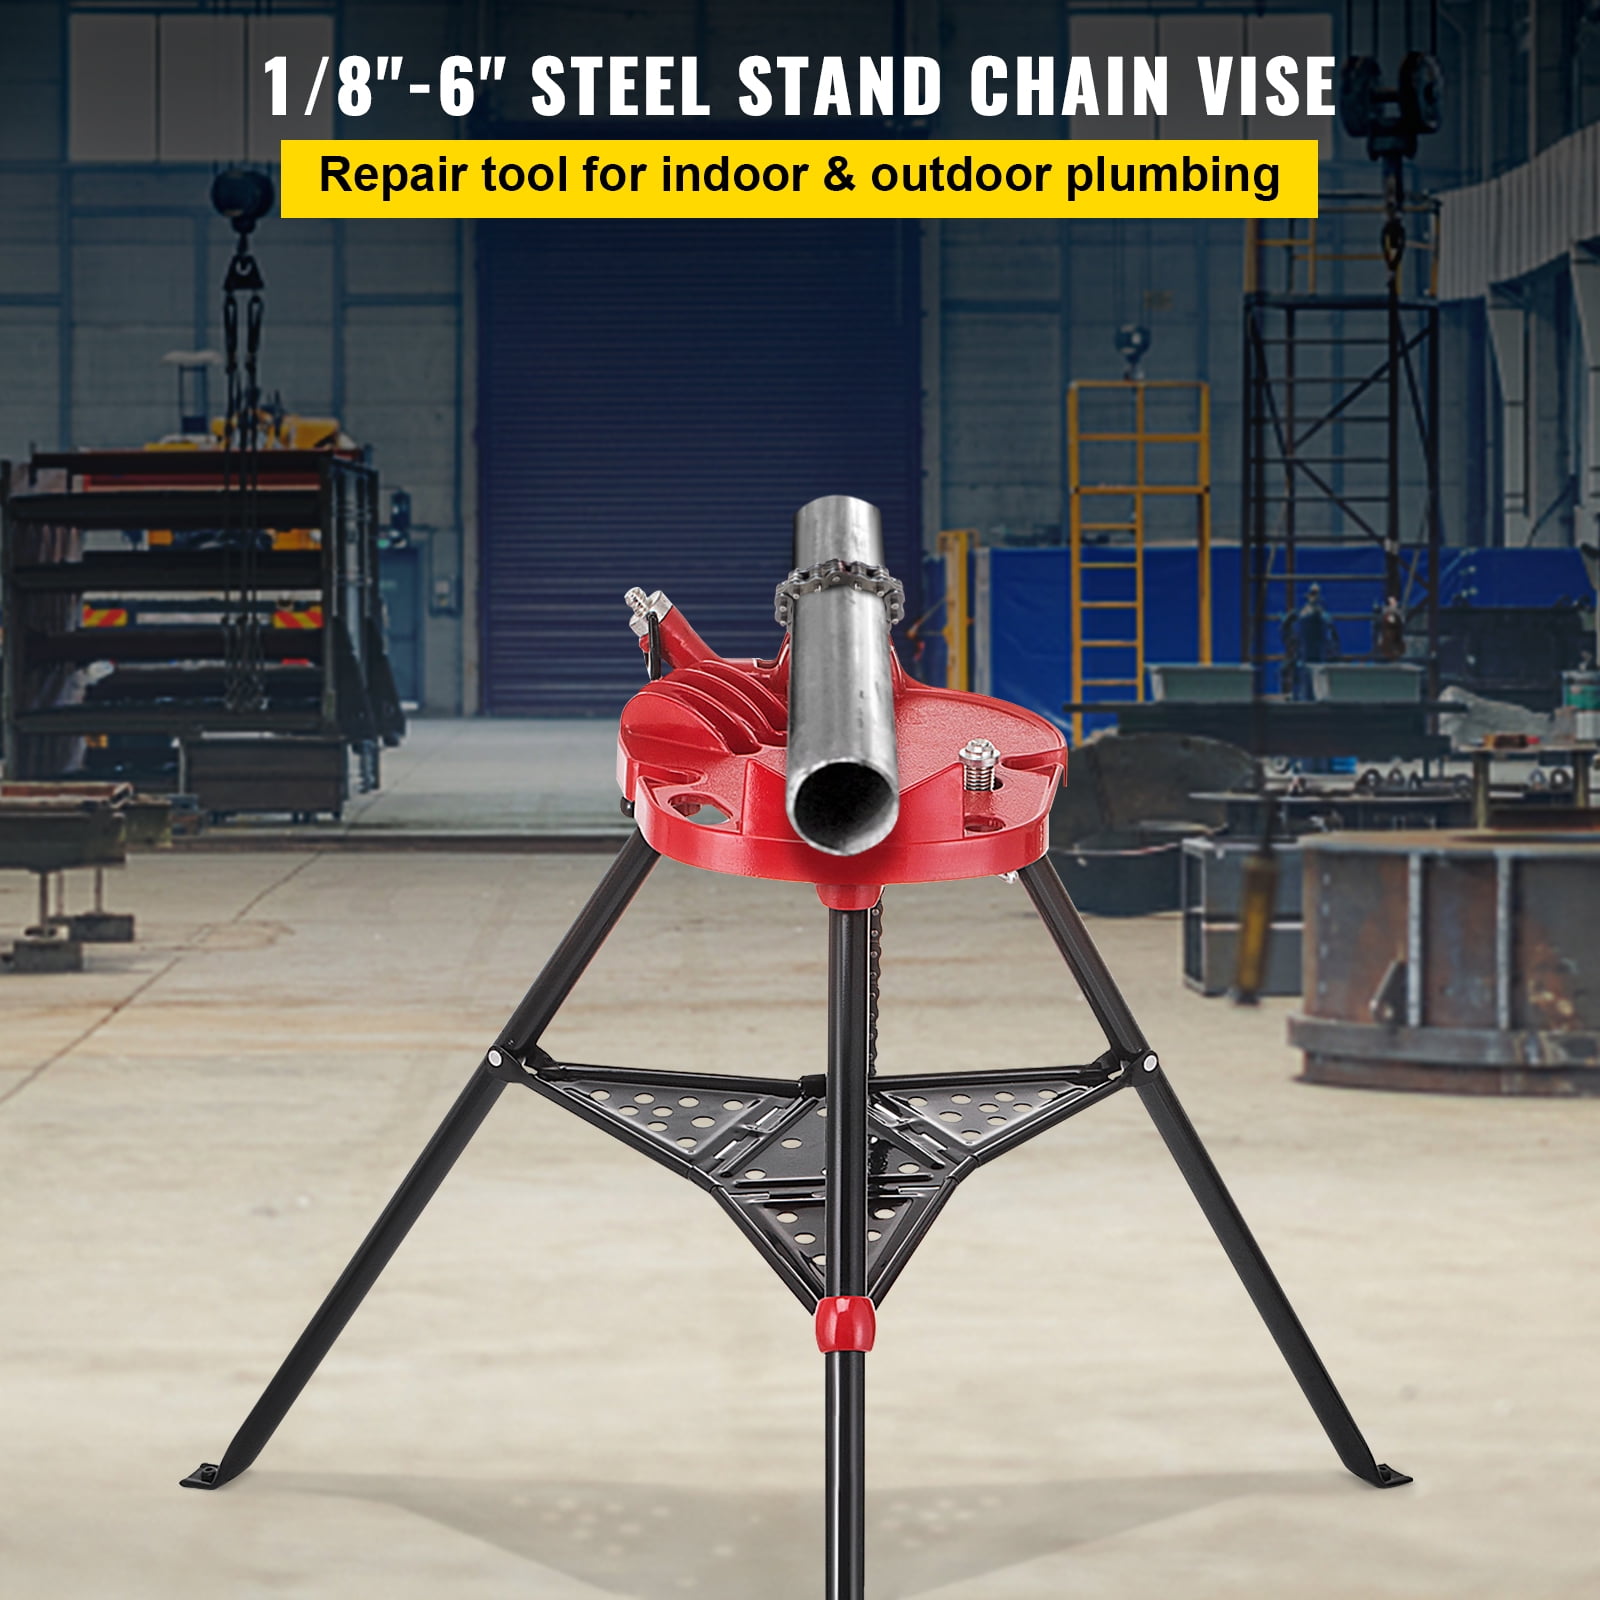 460 6" Tripod Pipe Chain Vise Stand w/ Steel Legs & Rubber Mounts hlk 